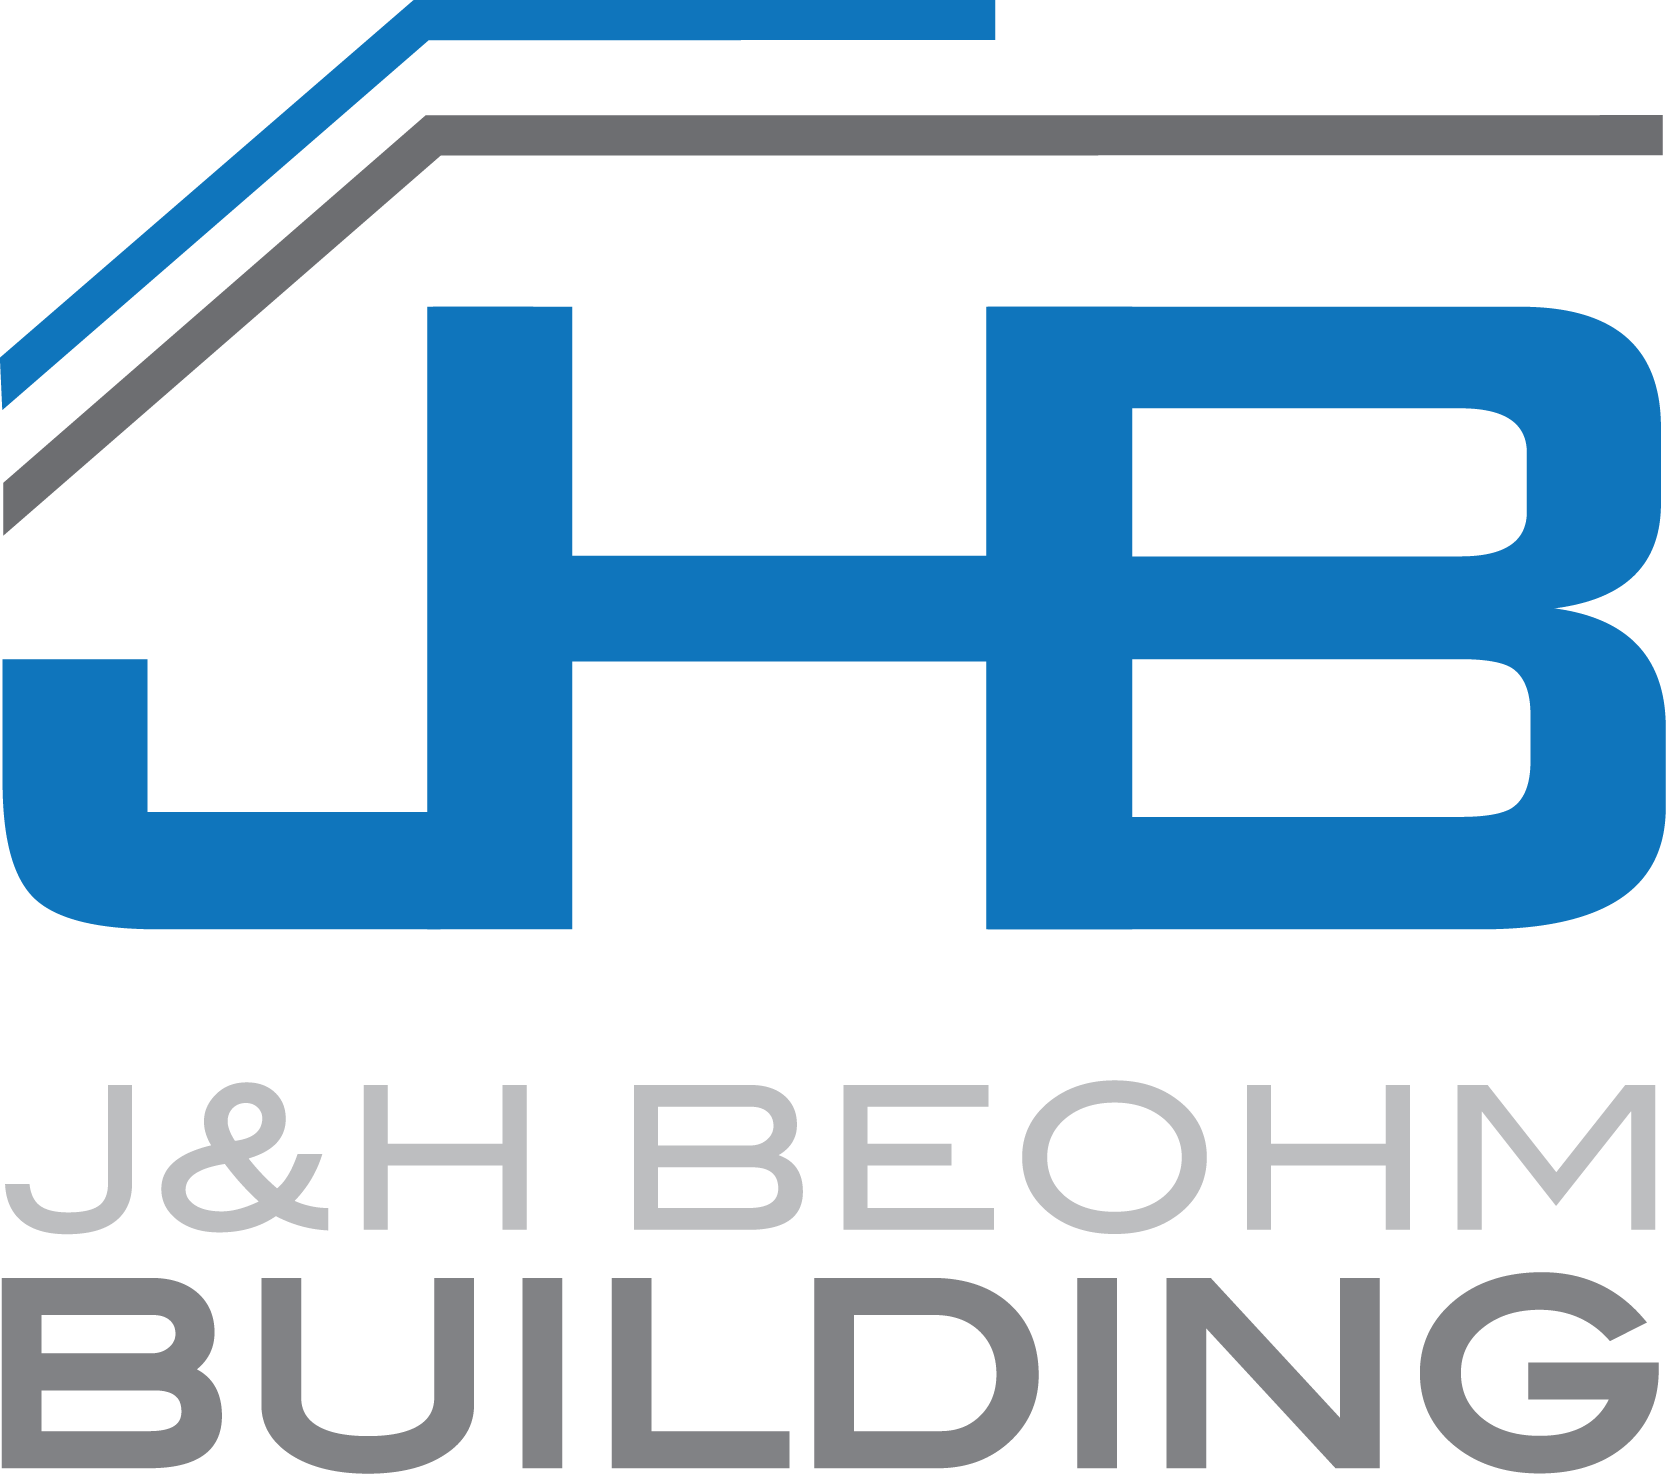 J & H Beohm Building: Residential & Commercial Builders